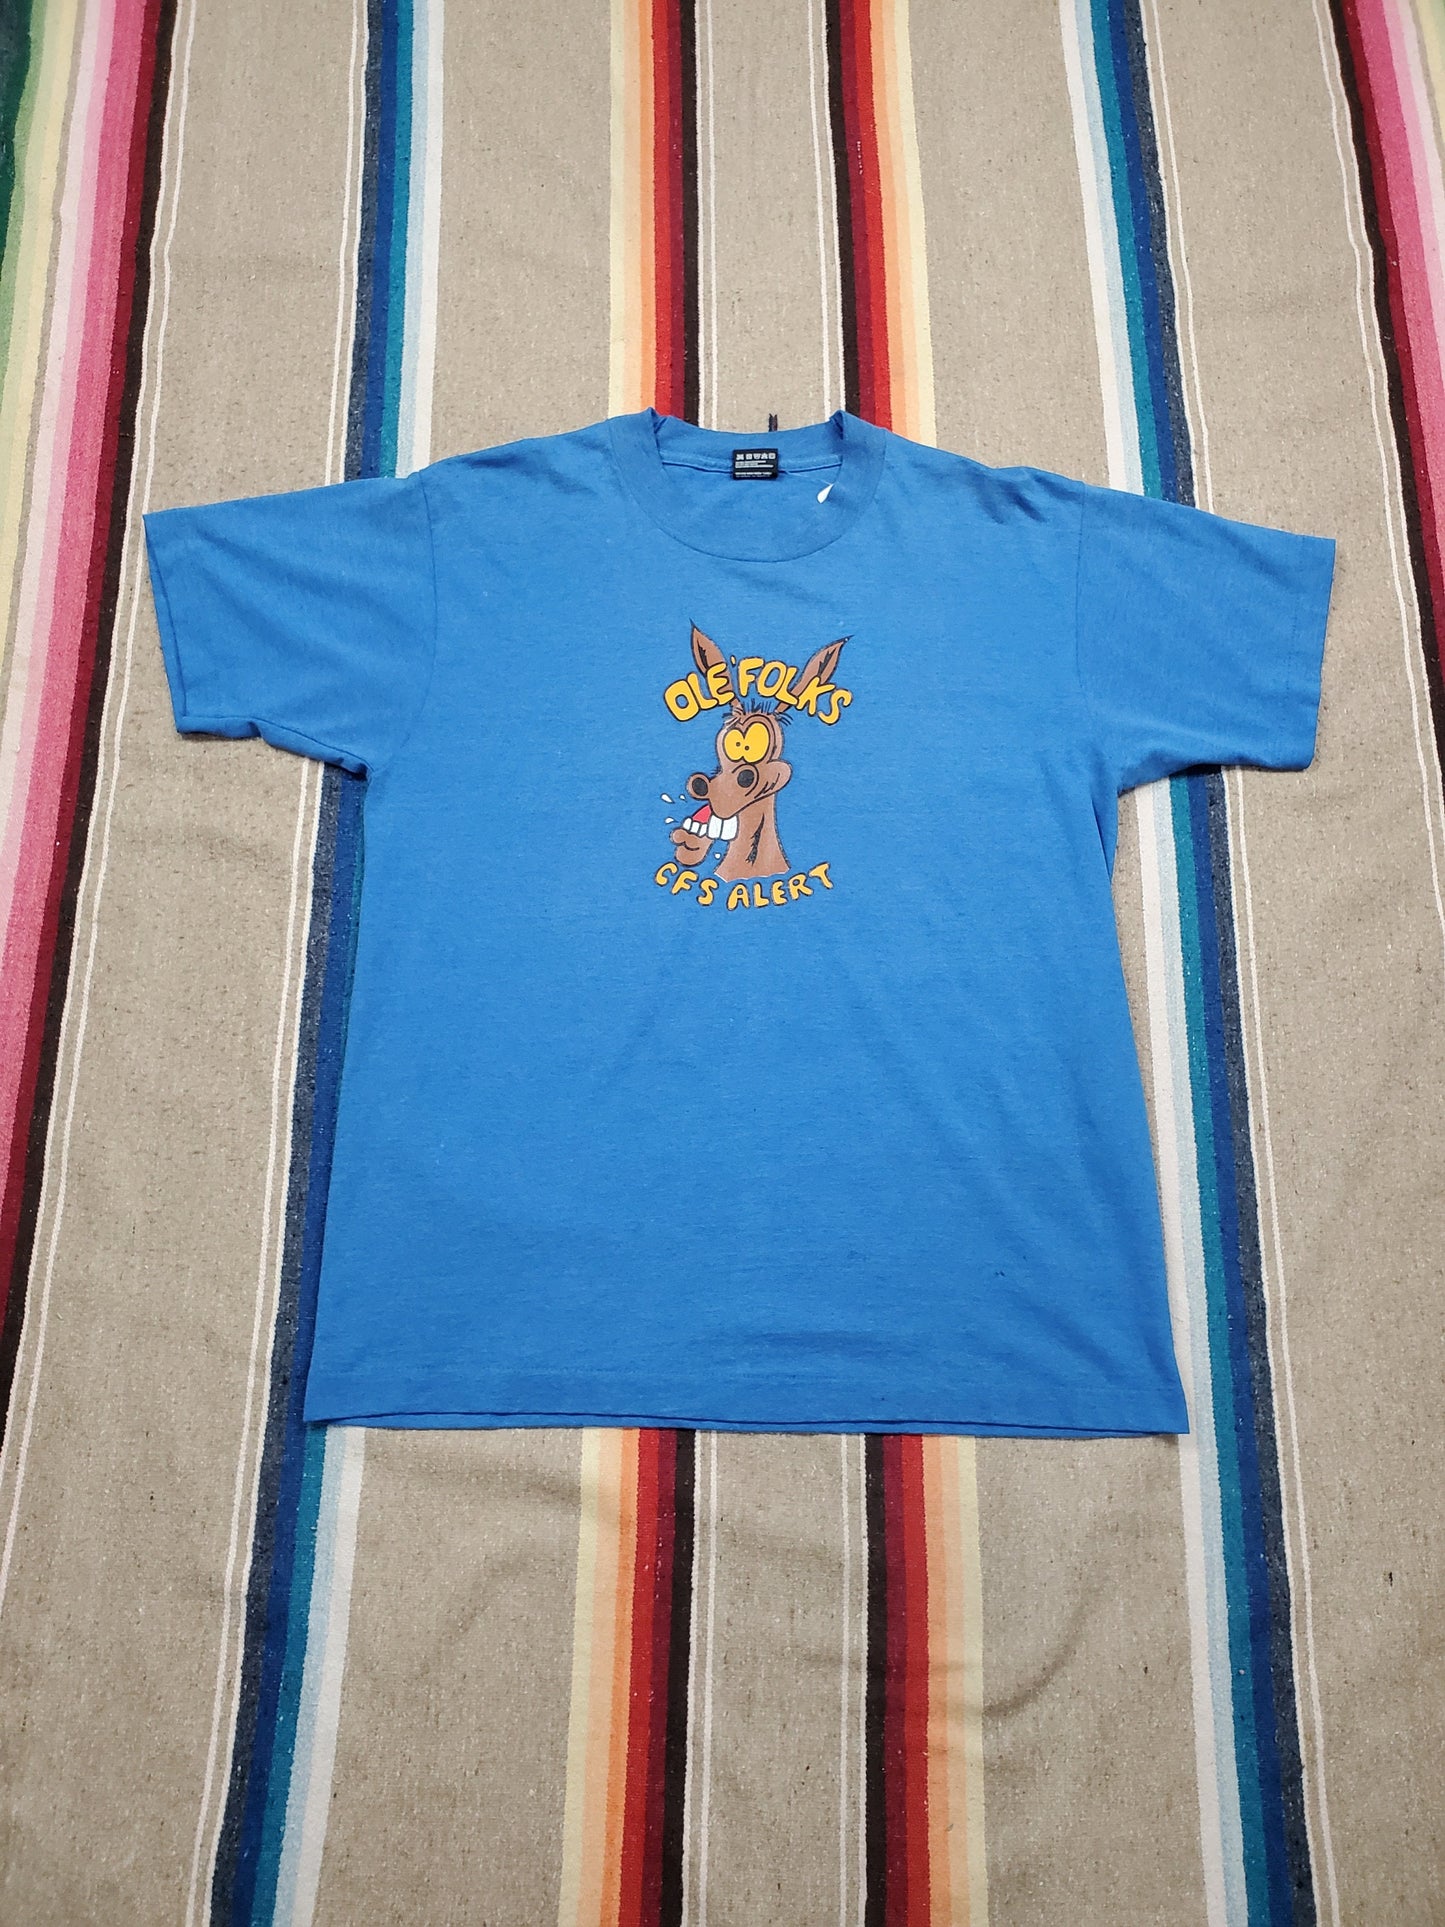 1990s Ole' Folks CFS Alert Donkey T-Shirt Made in USA Size L